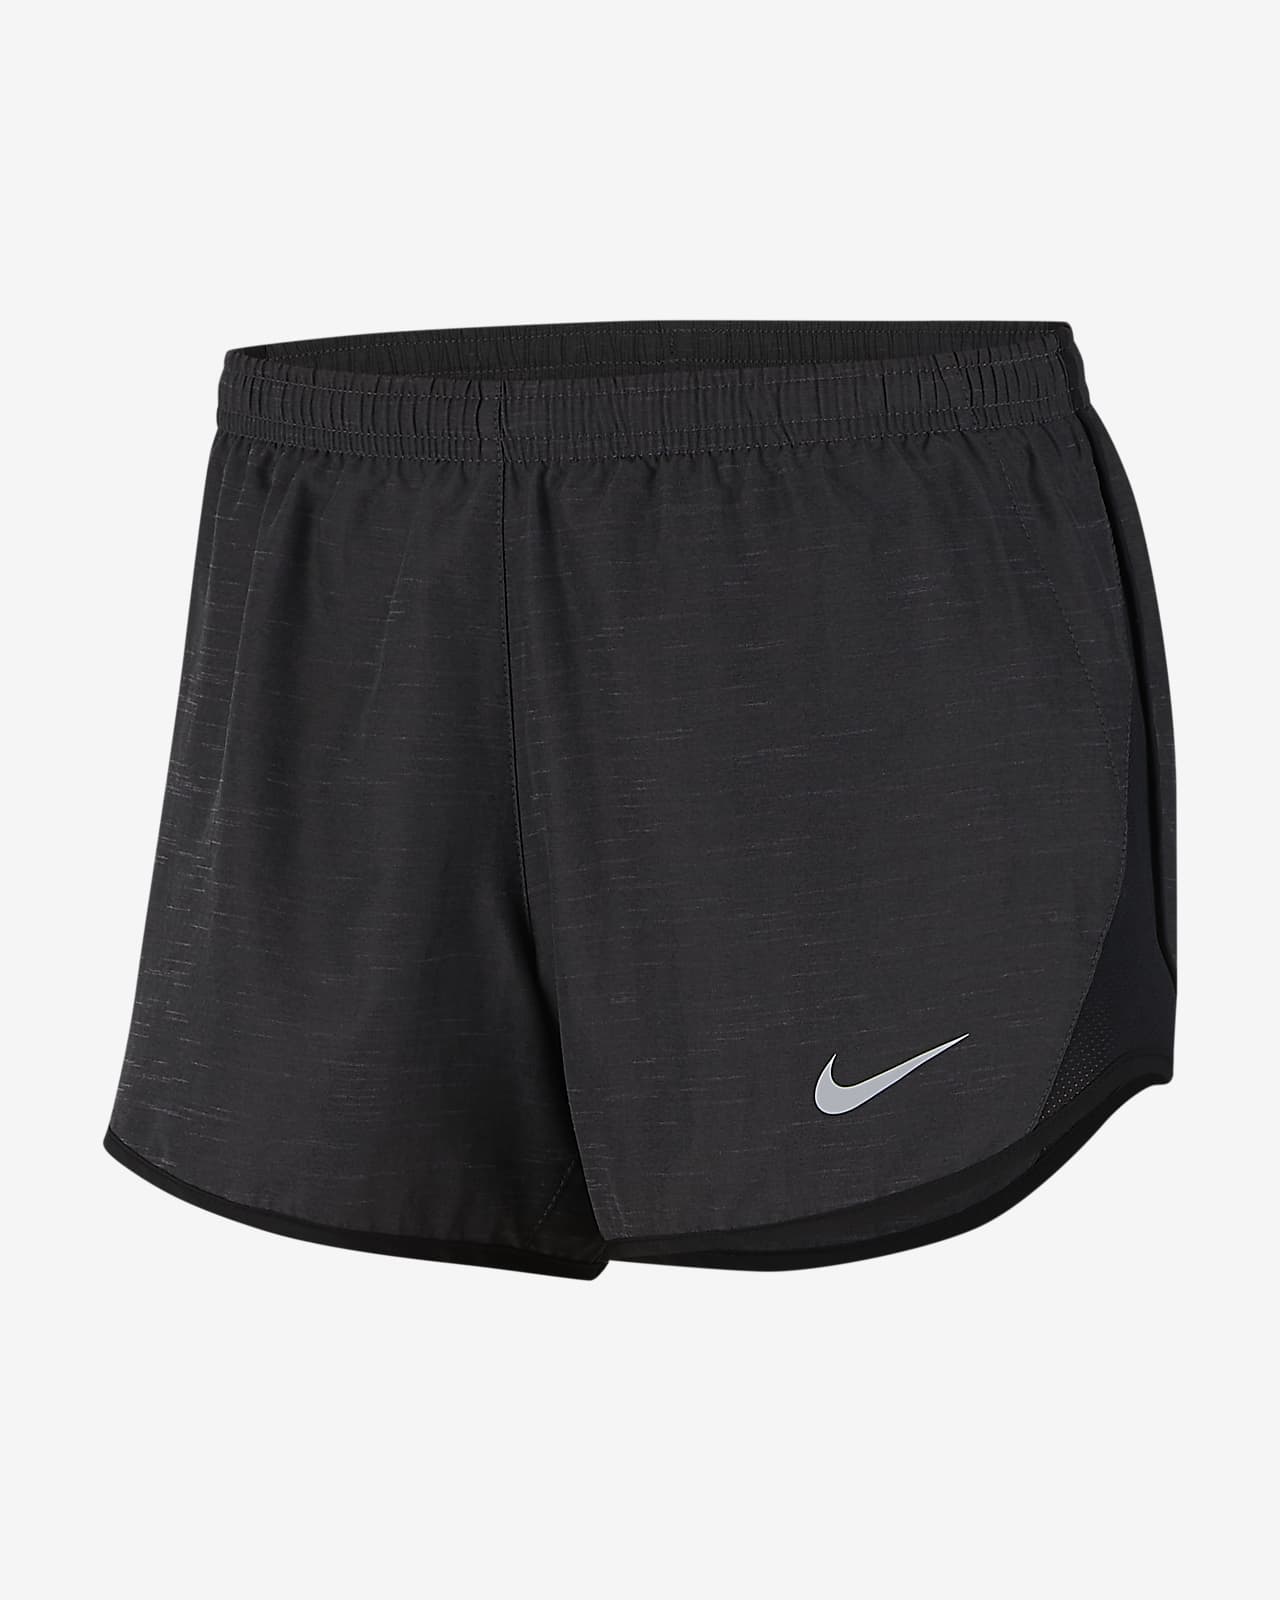 Shorts de running para mujer Nike Nike.com